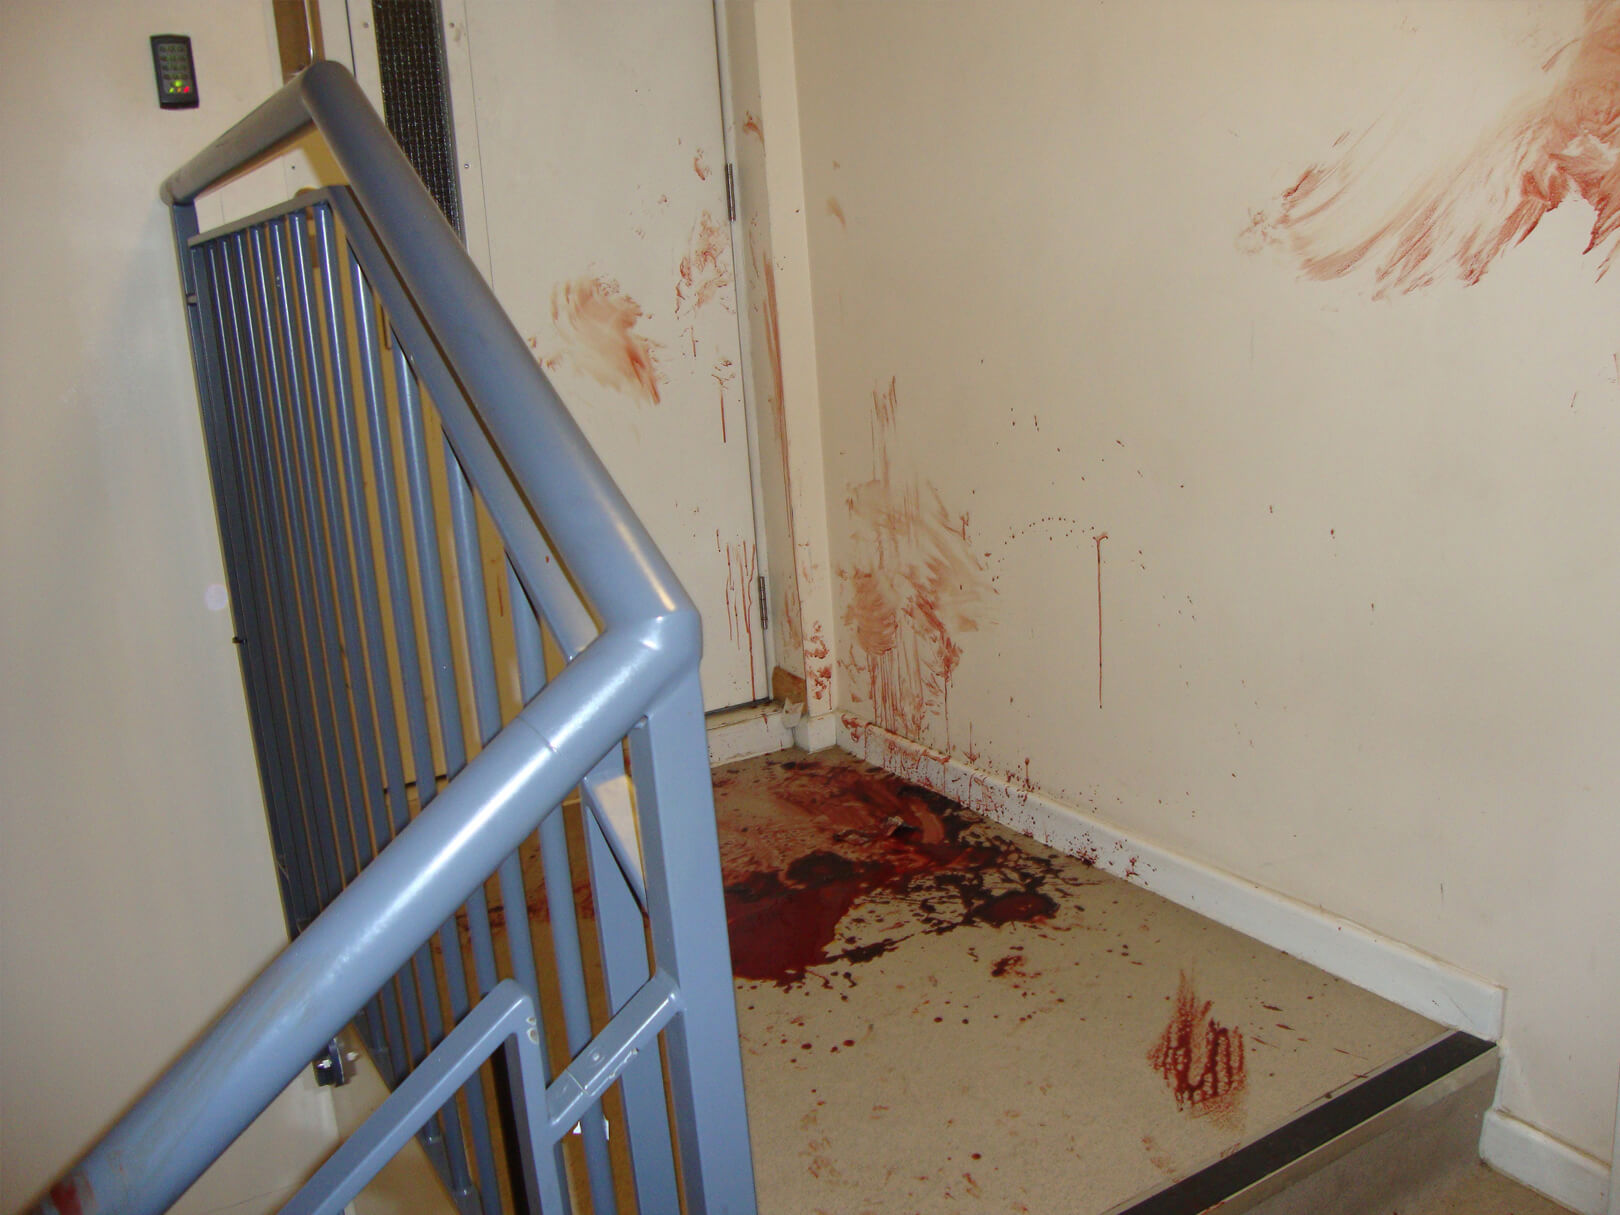 Trauma scene in hallway of flat